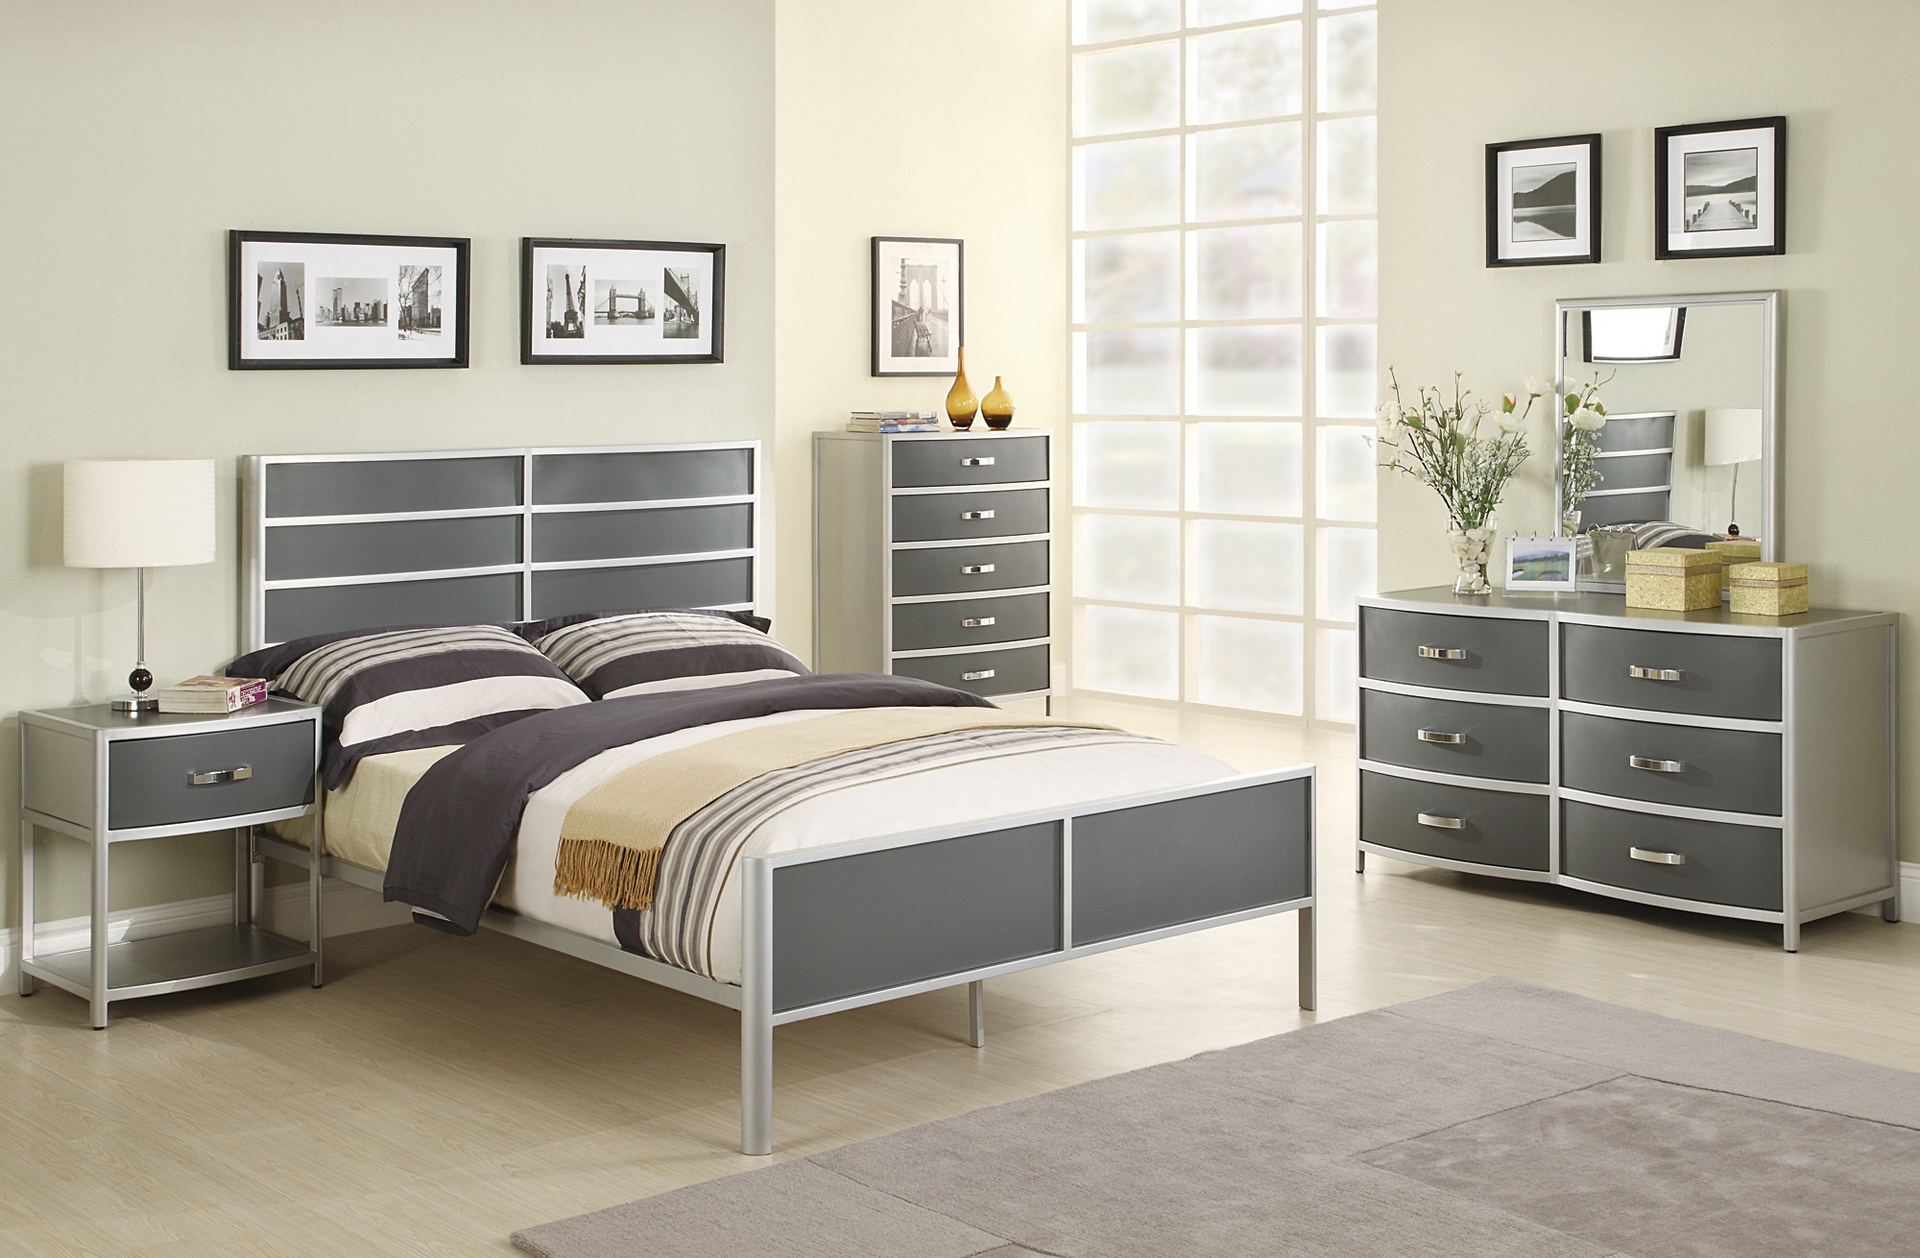 silver and black embossed bedroom furniture